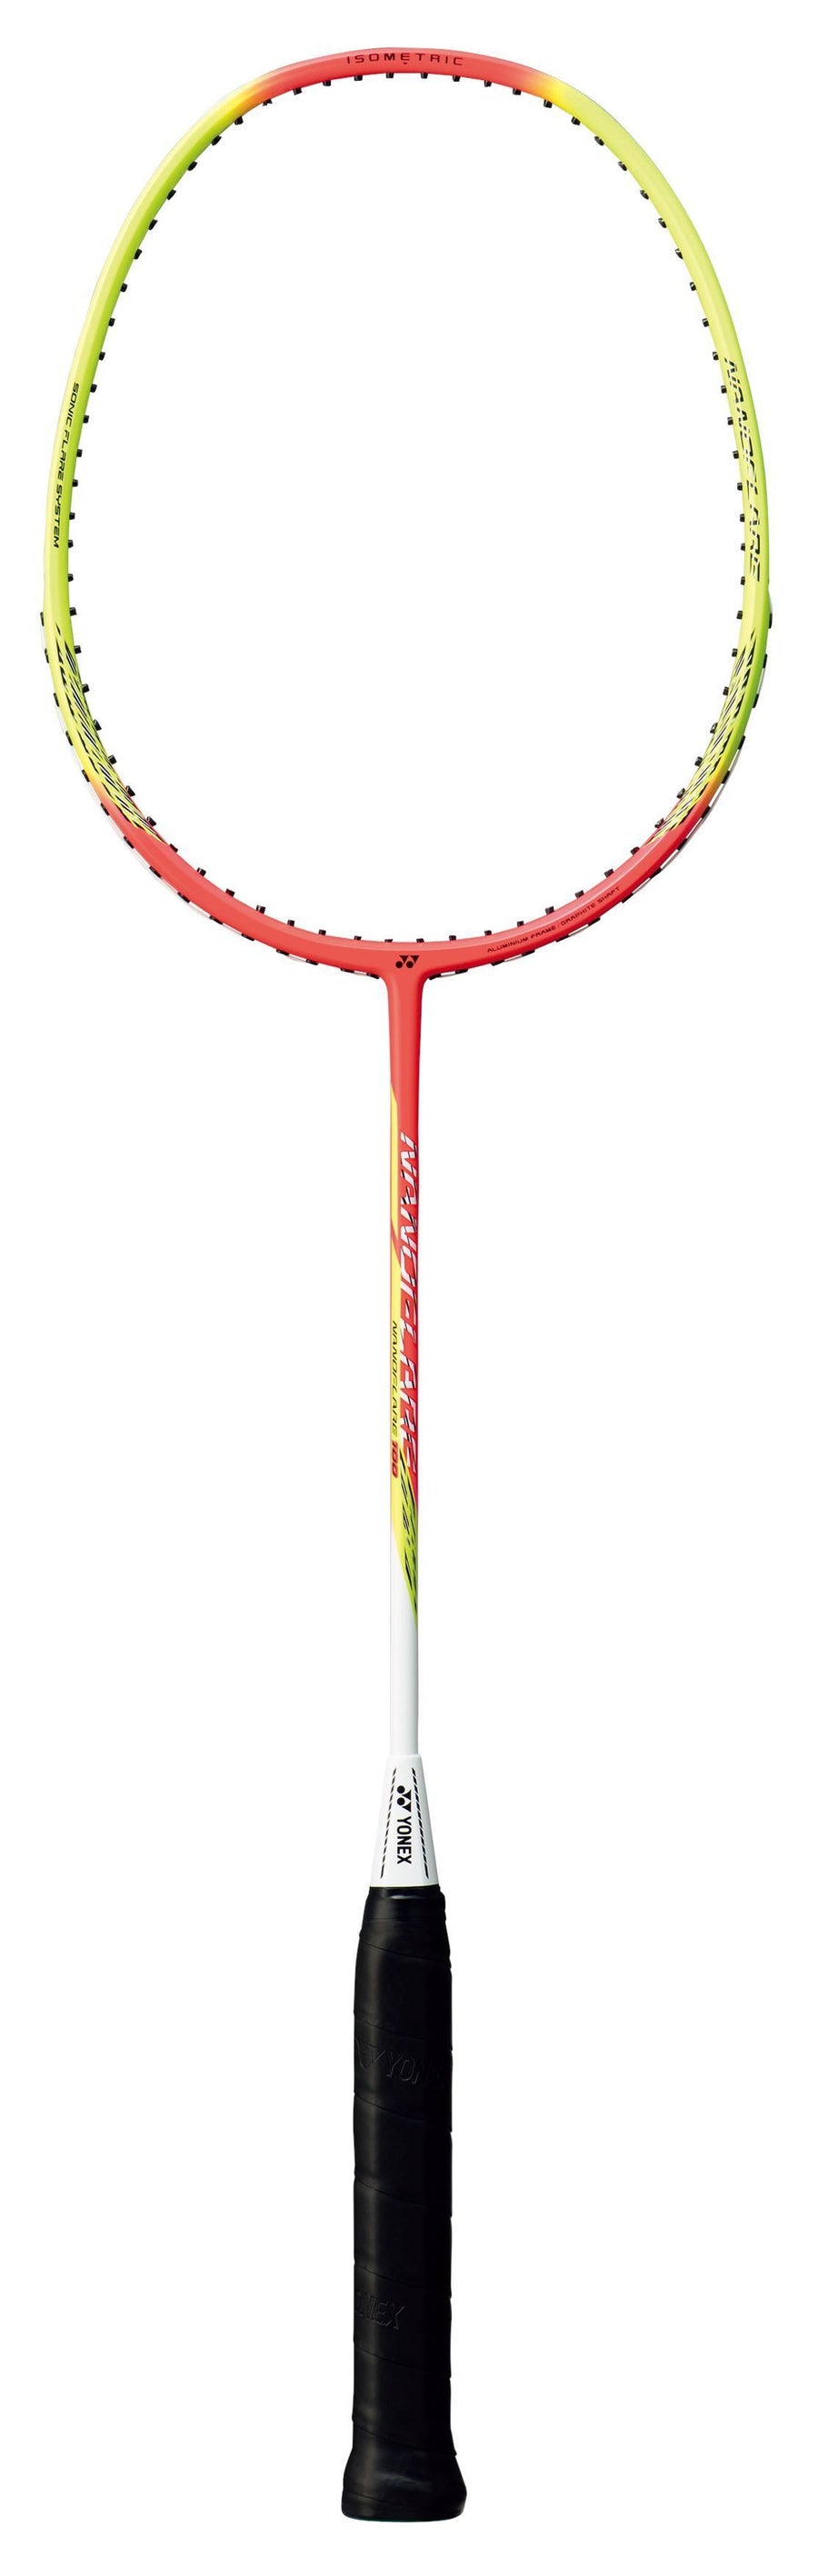 Yonex Nanoflare 100 3U Badminton Racket Strung Badminton Racquets Yonex G5 Pink/Yellow 